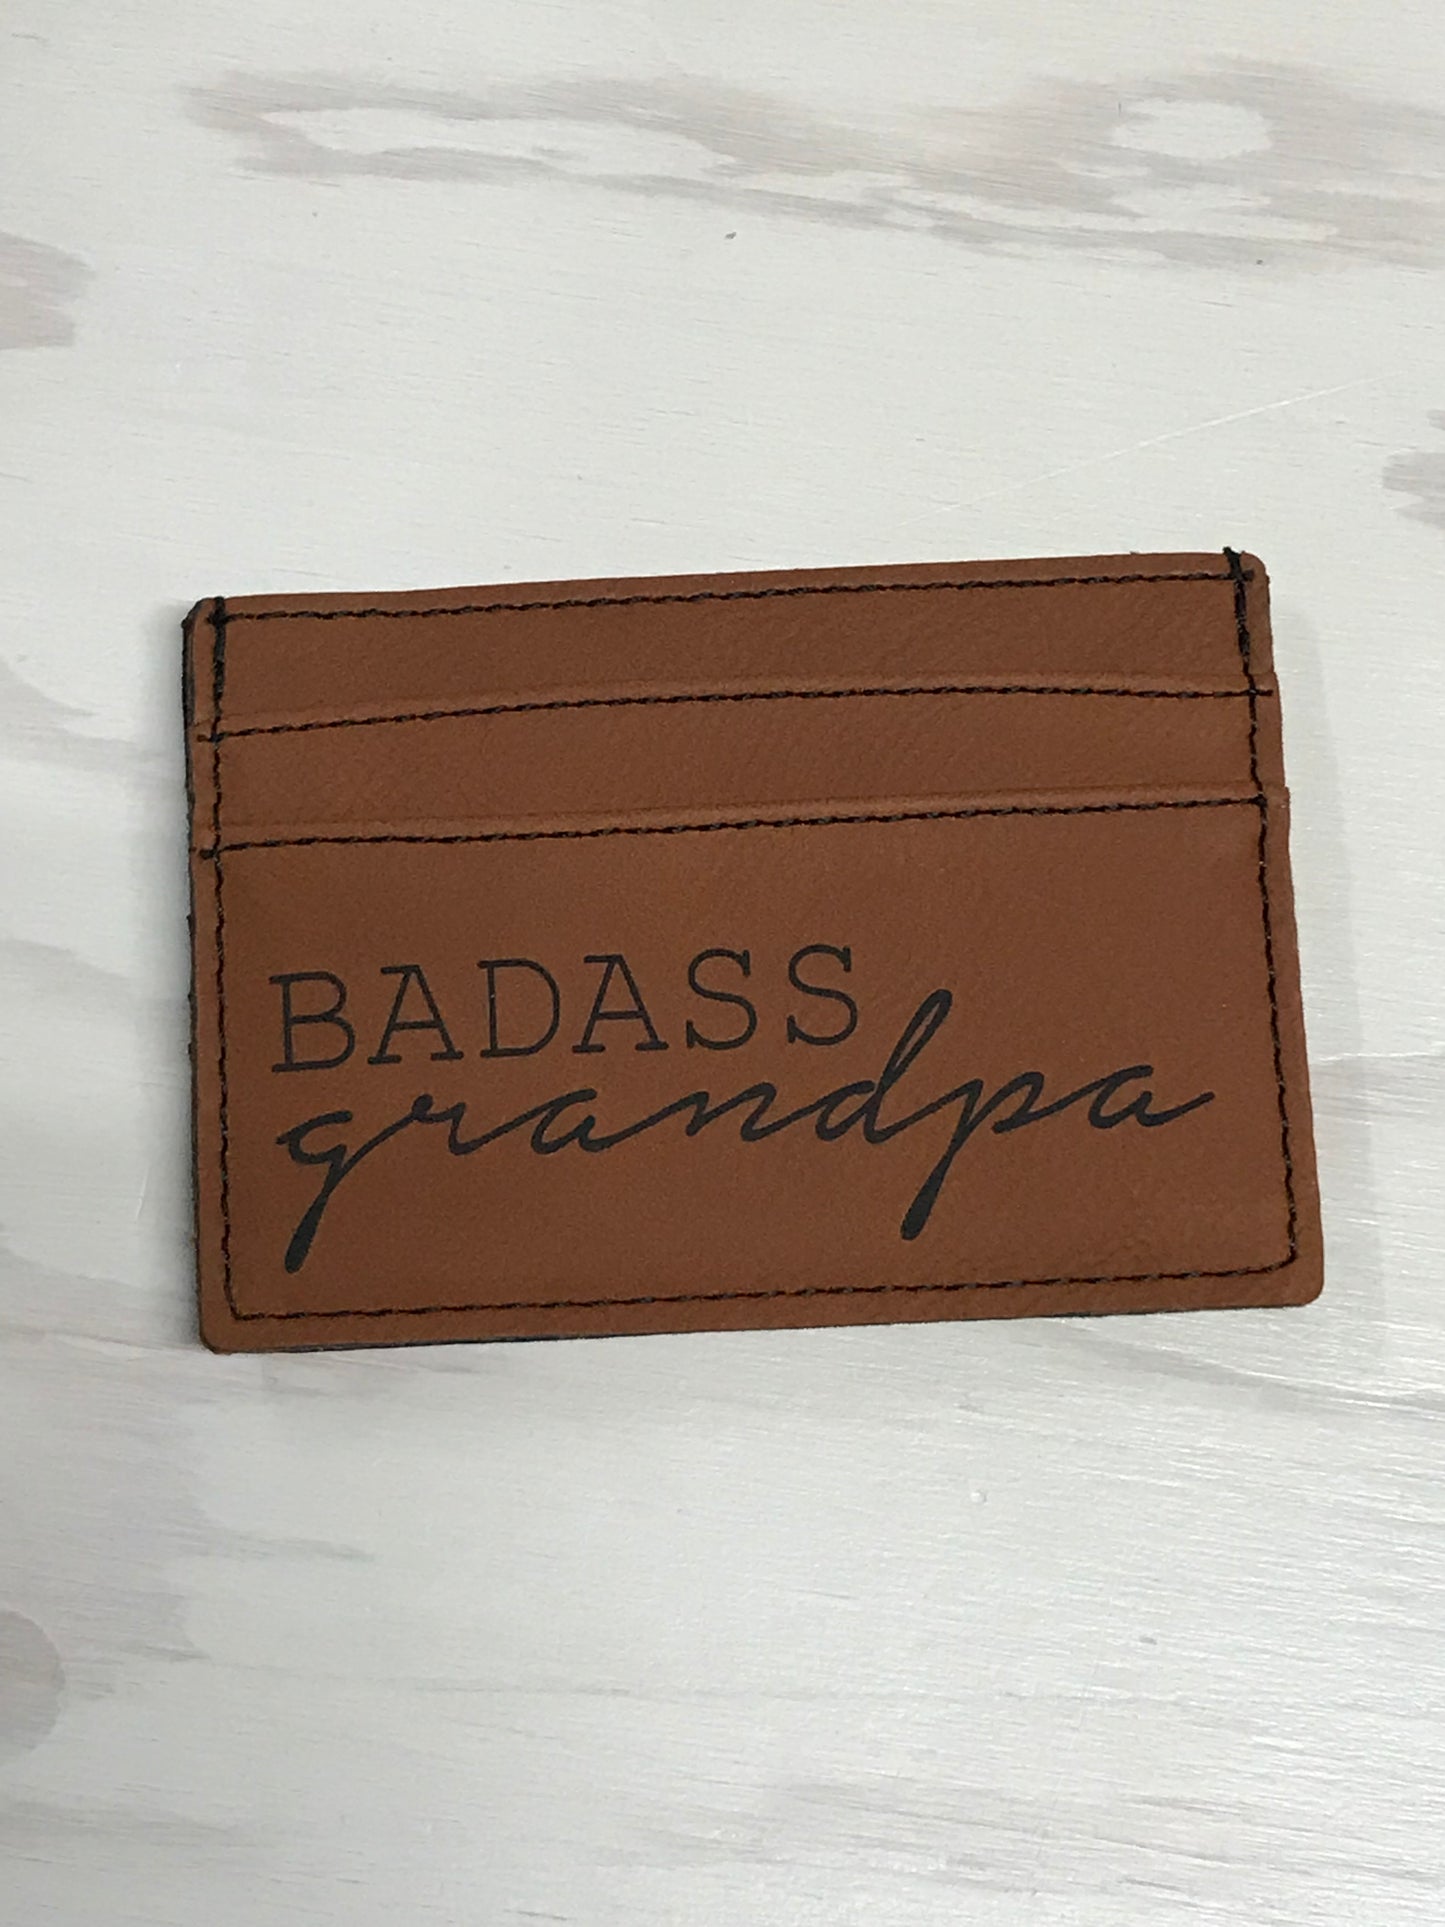 Badass Grandpa Money Clip Card Holder